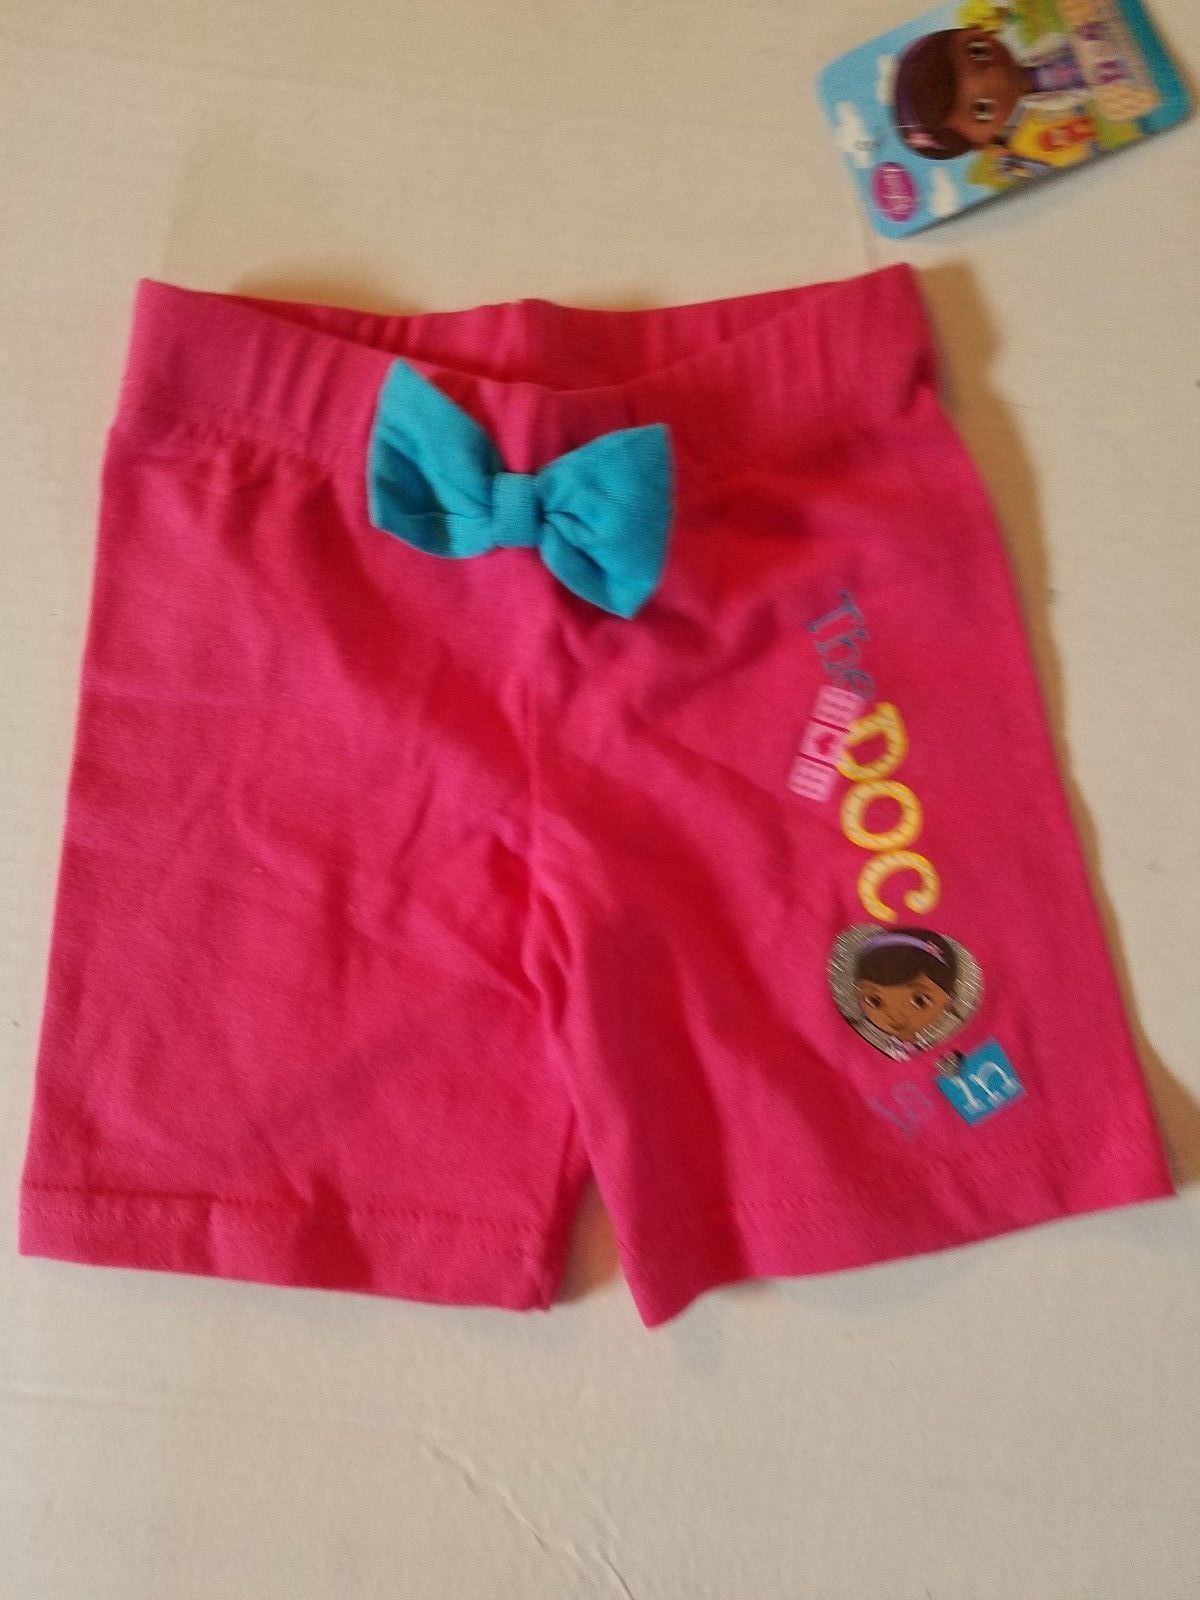 Disney Junior  Doc McStuffin Shorts Sizes 4 Nwt Pink - $6.99